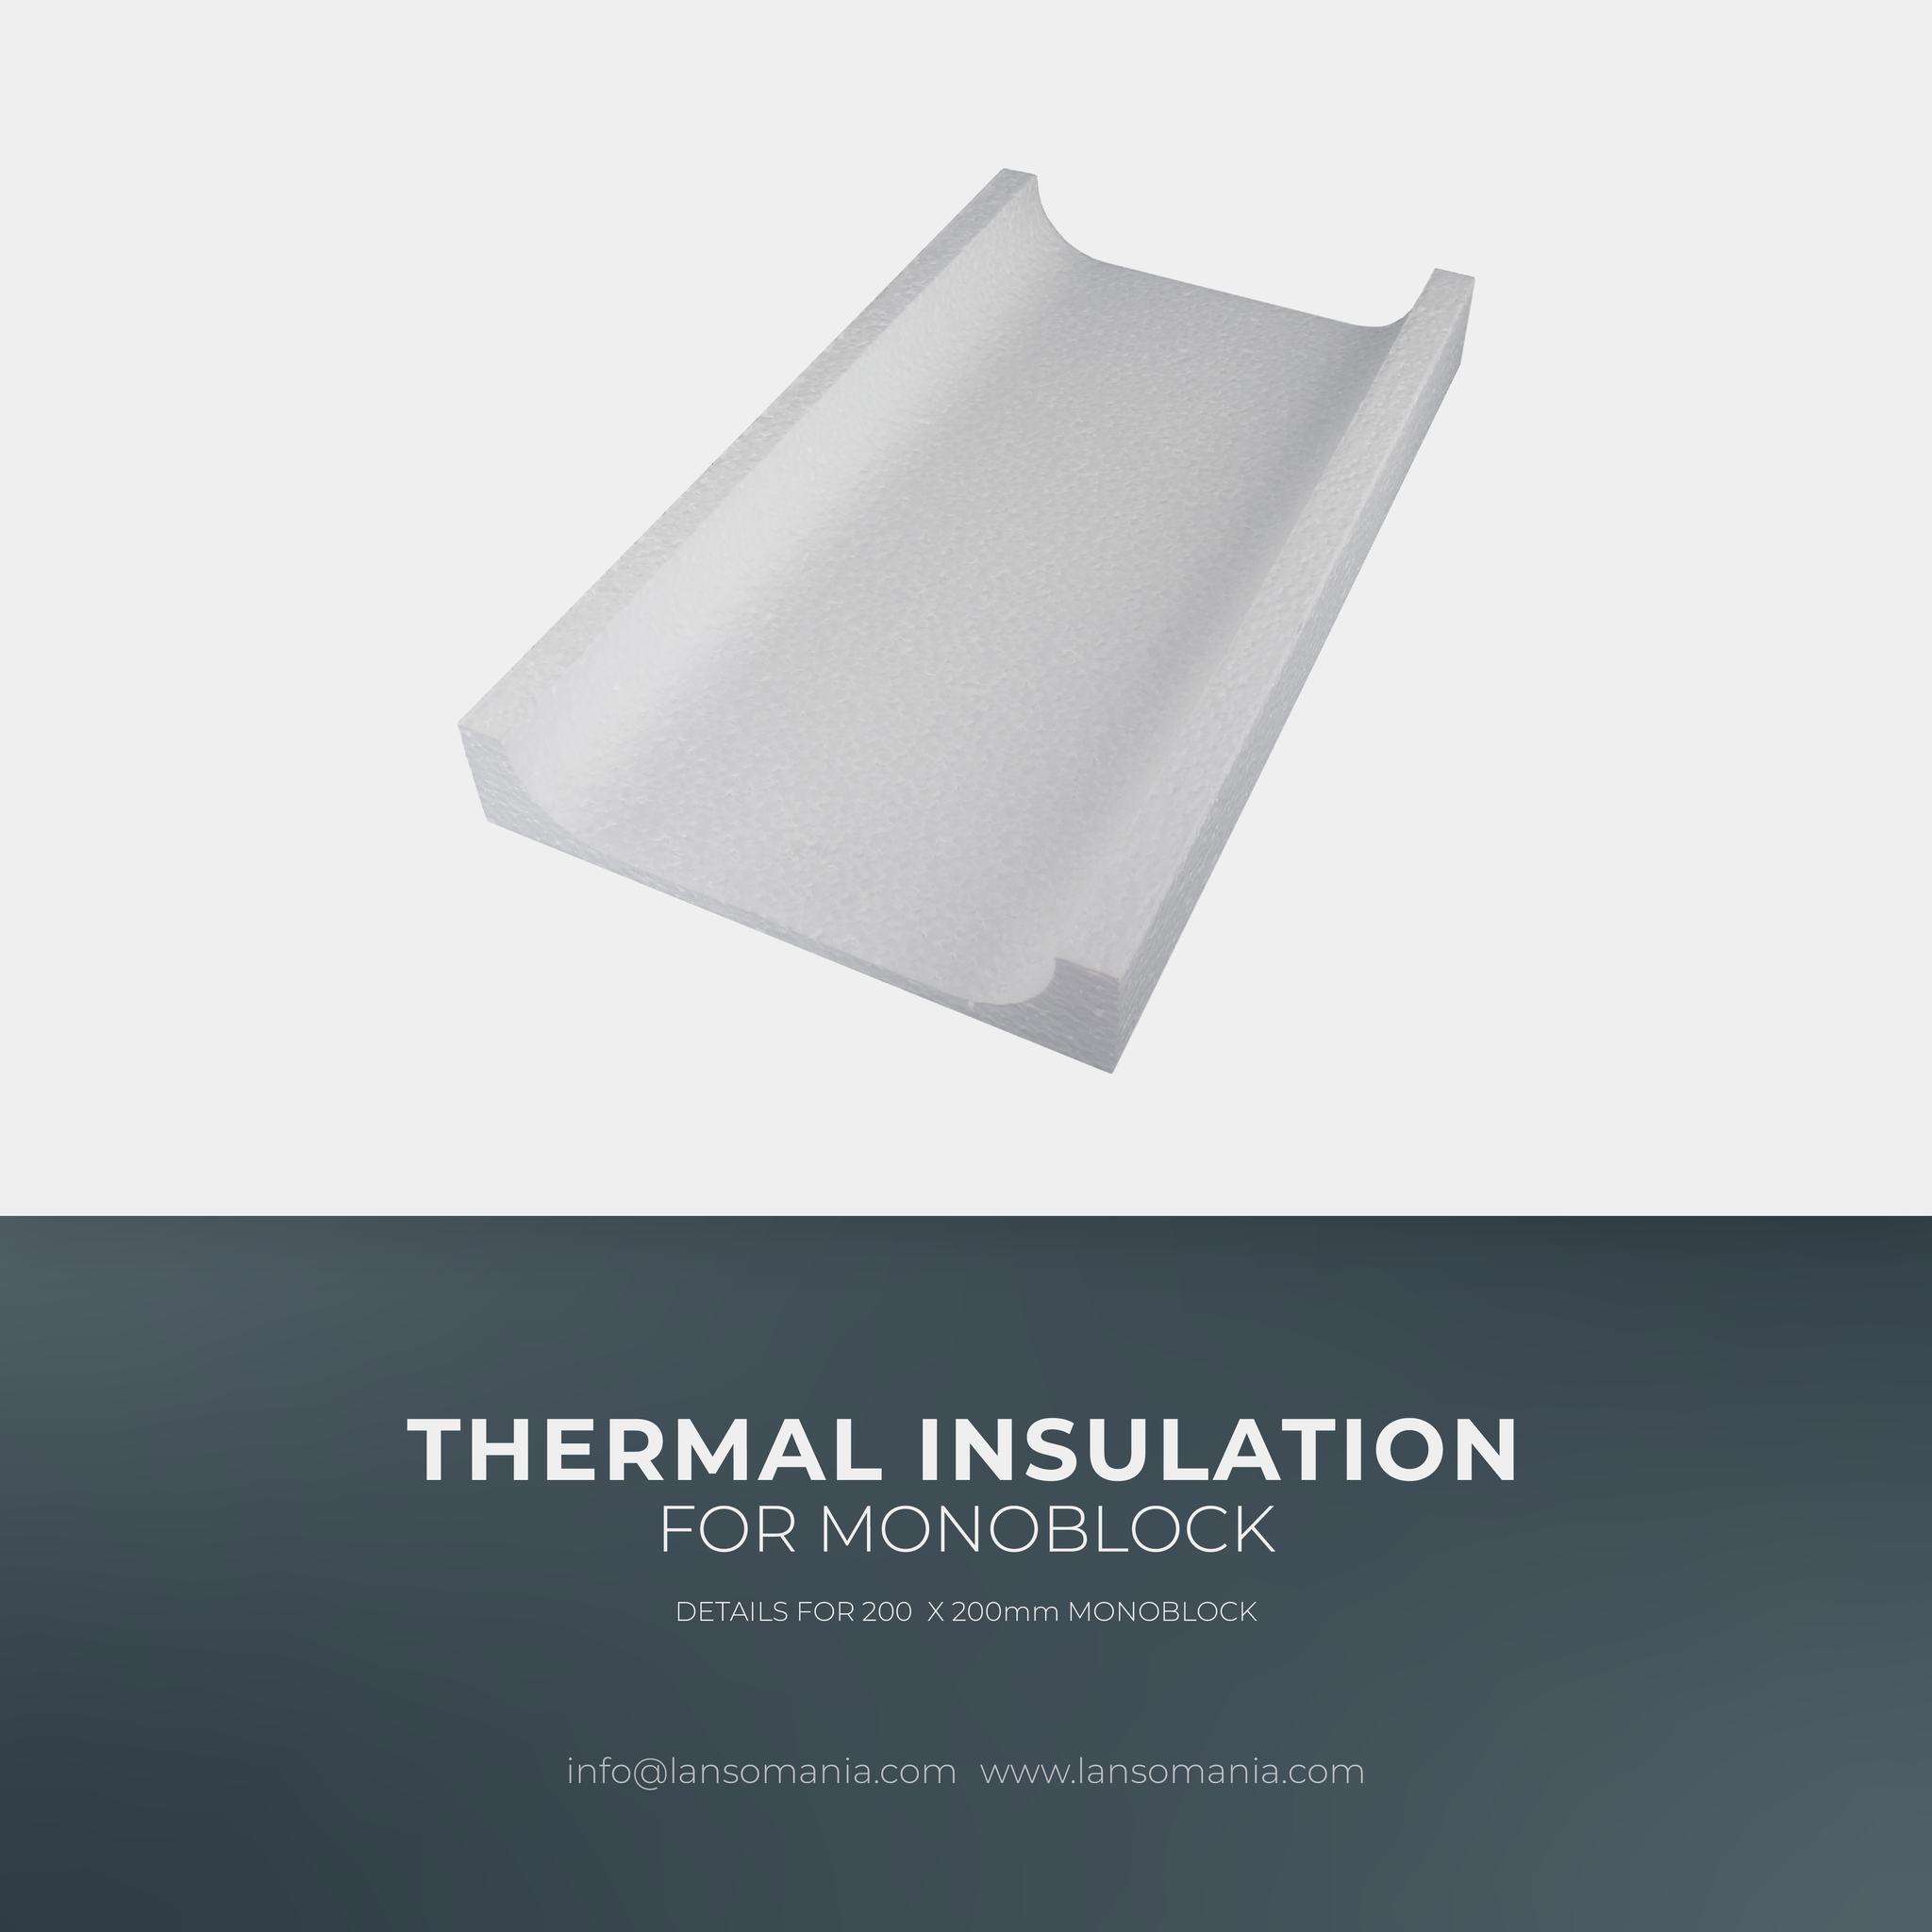 Thermo insulation for monoblock